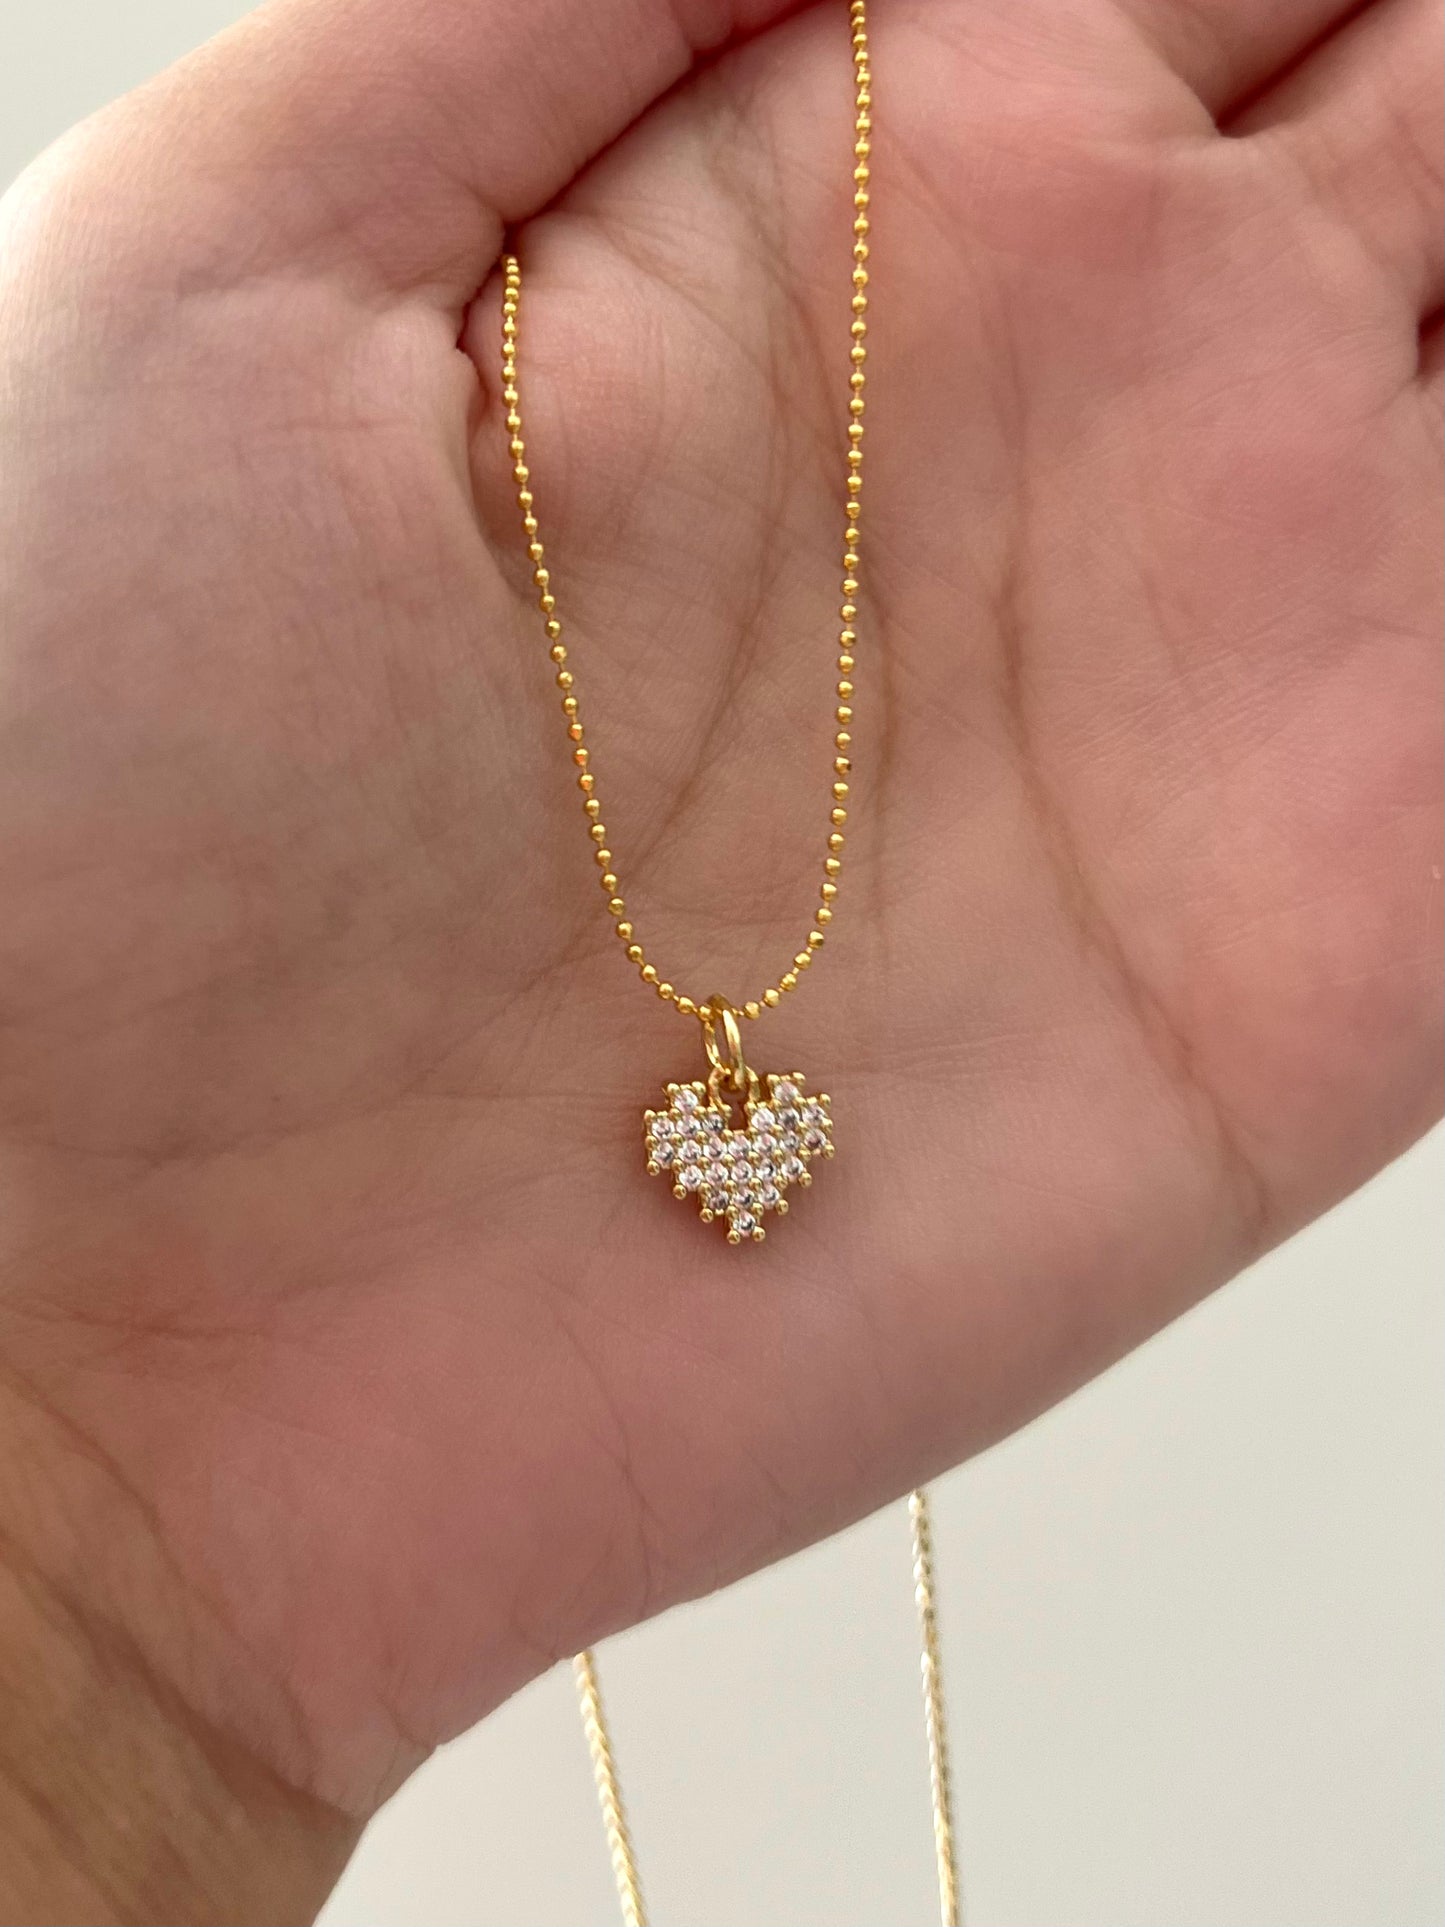 Digi Heart Necklace - Luna Alaska Jewelry